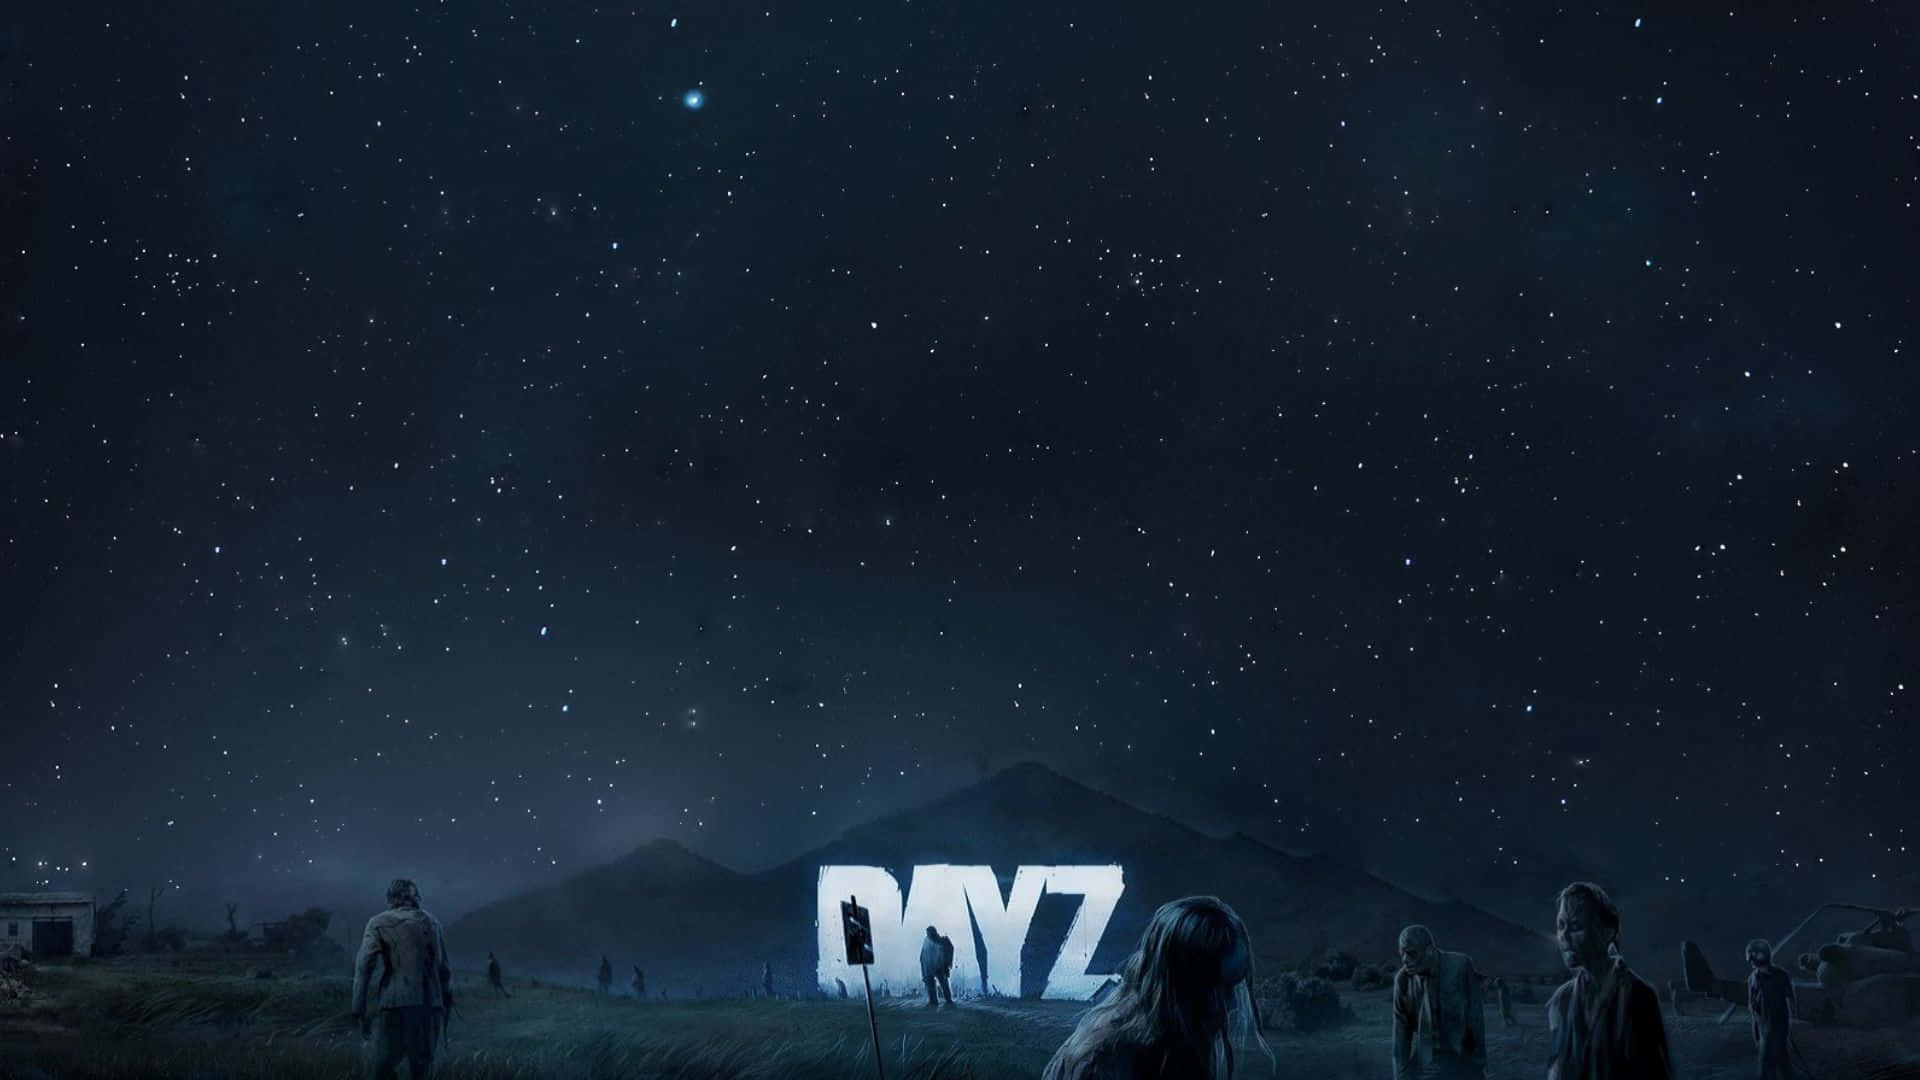 1080p Dayz Background Starry Night Field With Zombies